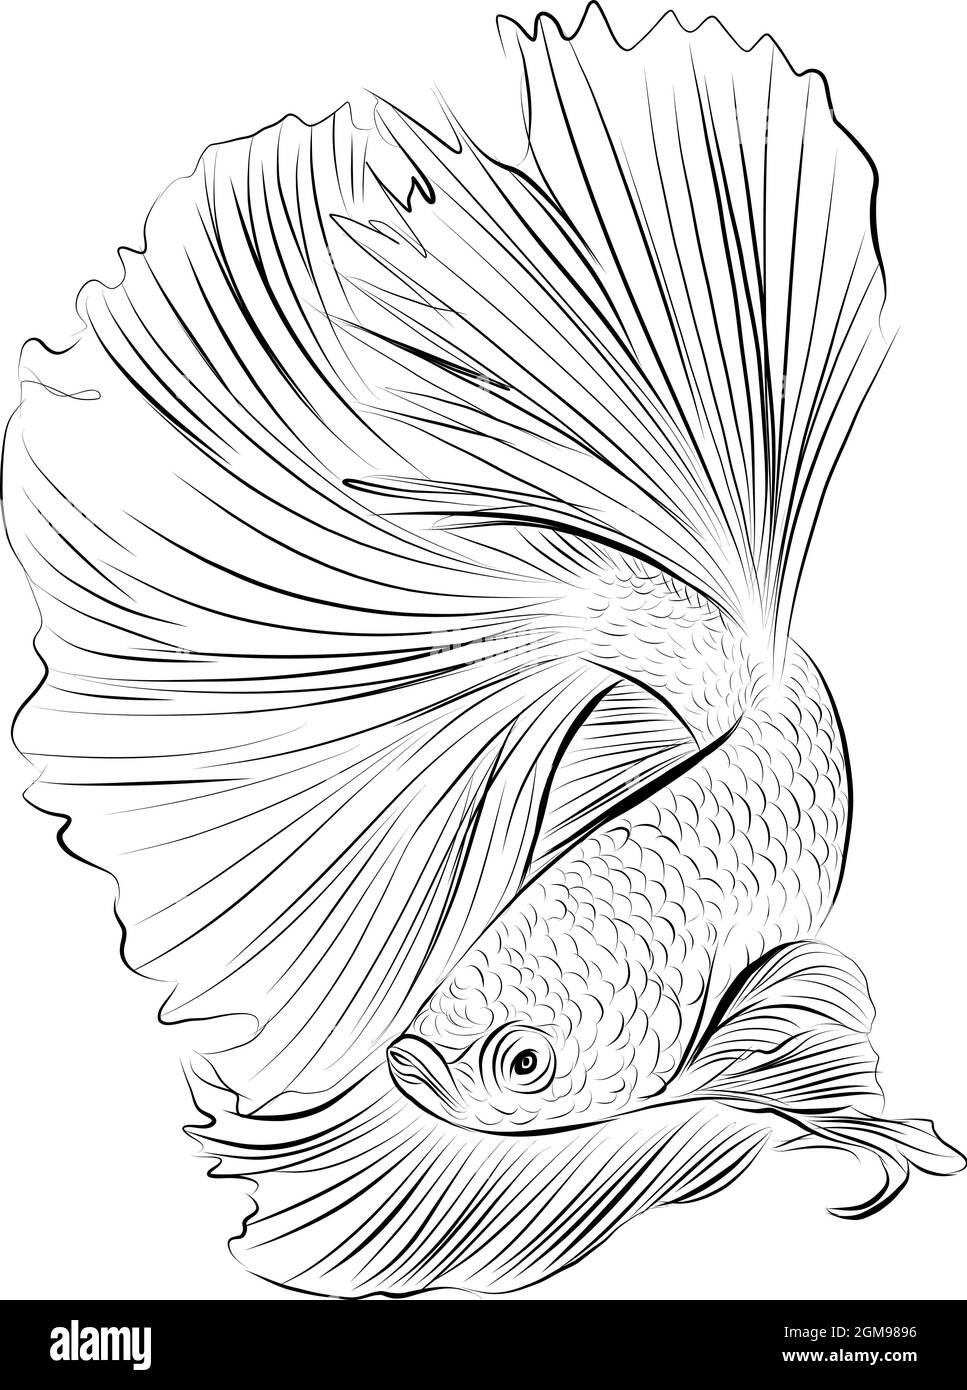 Dessin à la main de l'illustration siamese betta FISH Vector Illustration de Vecteur